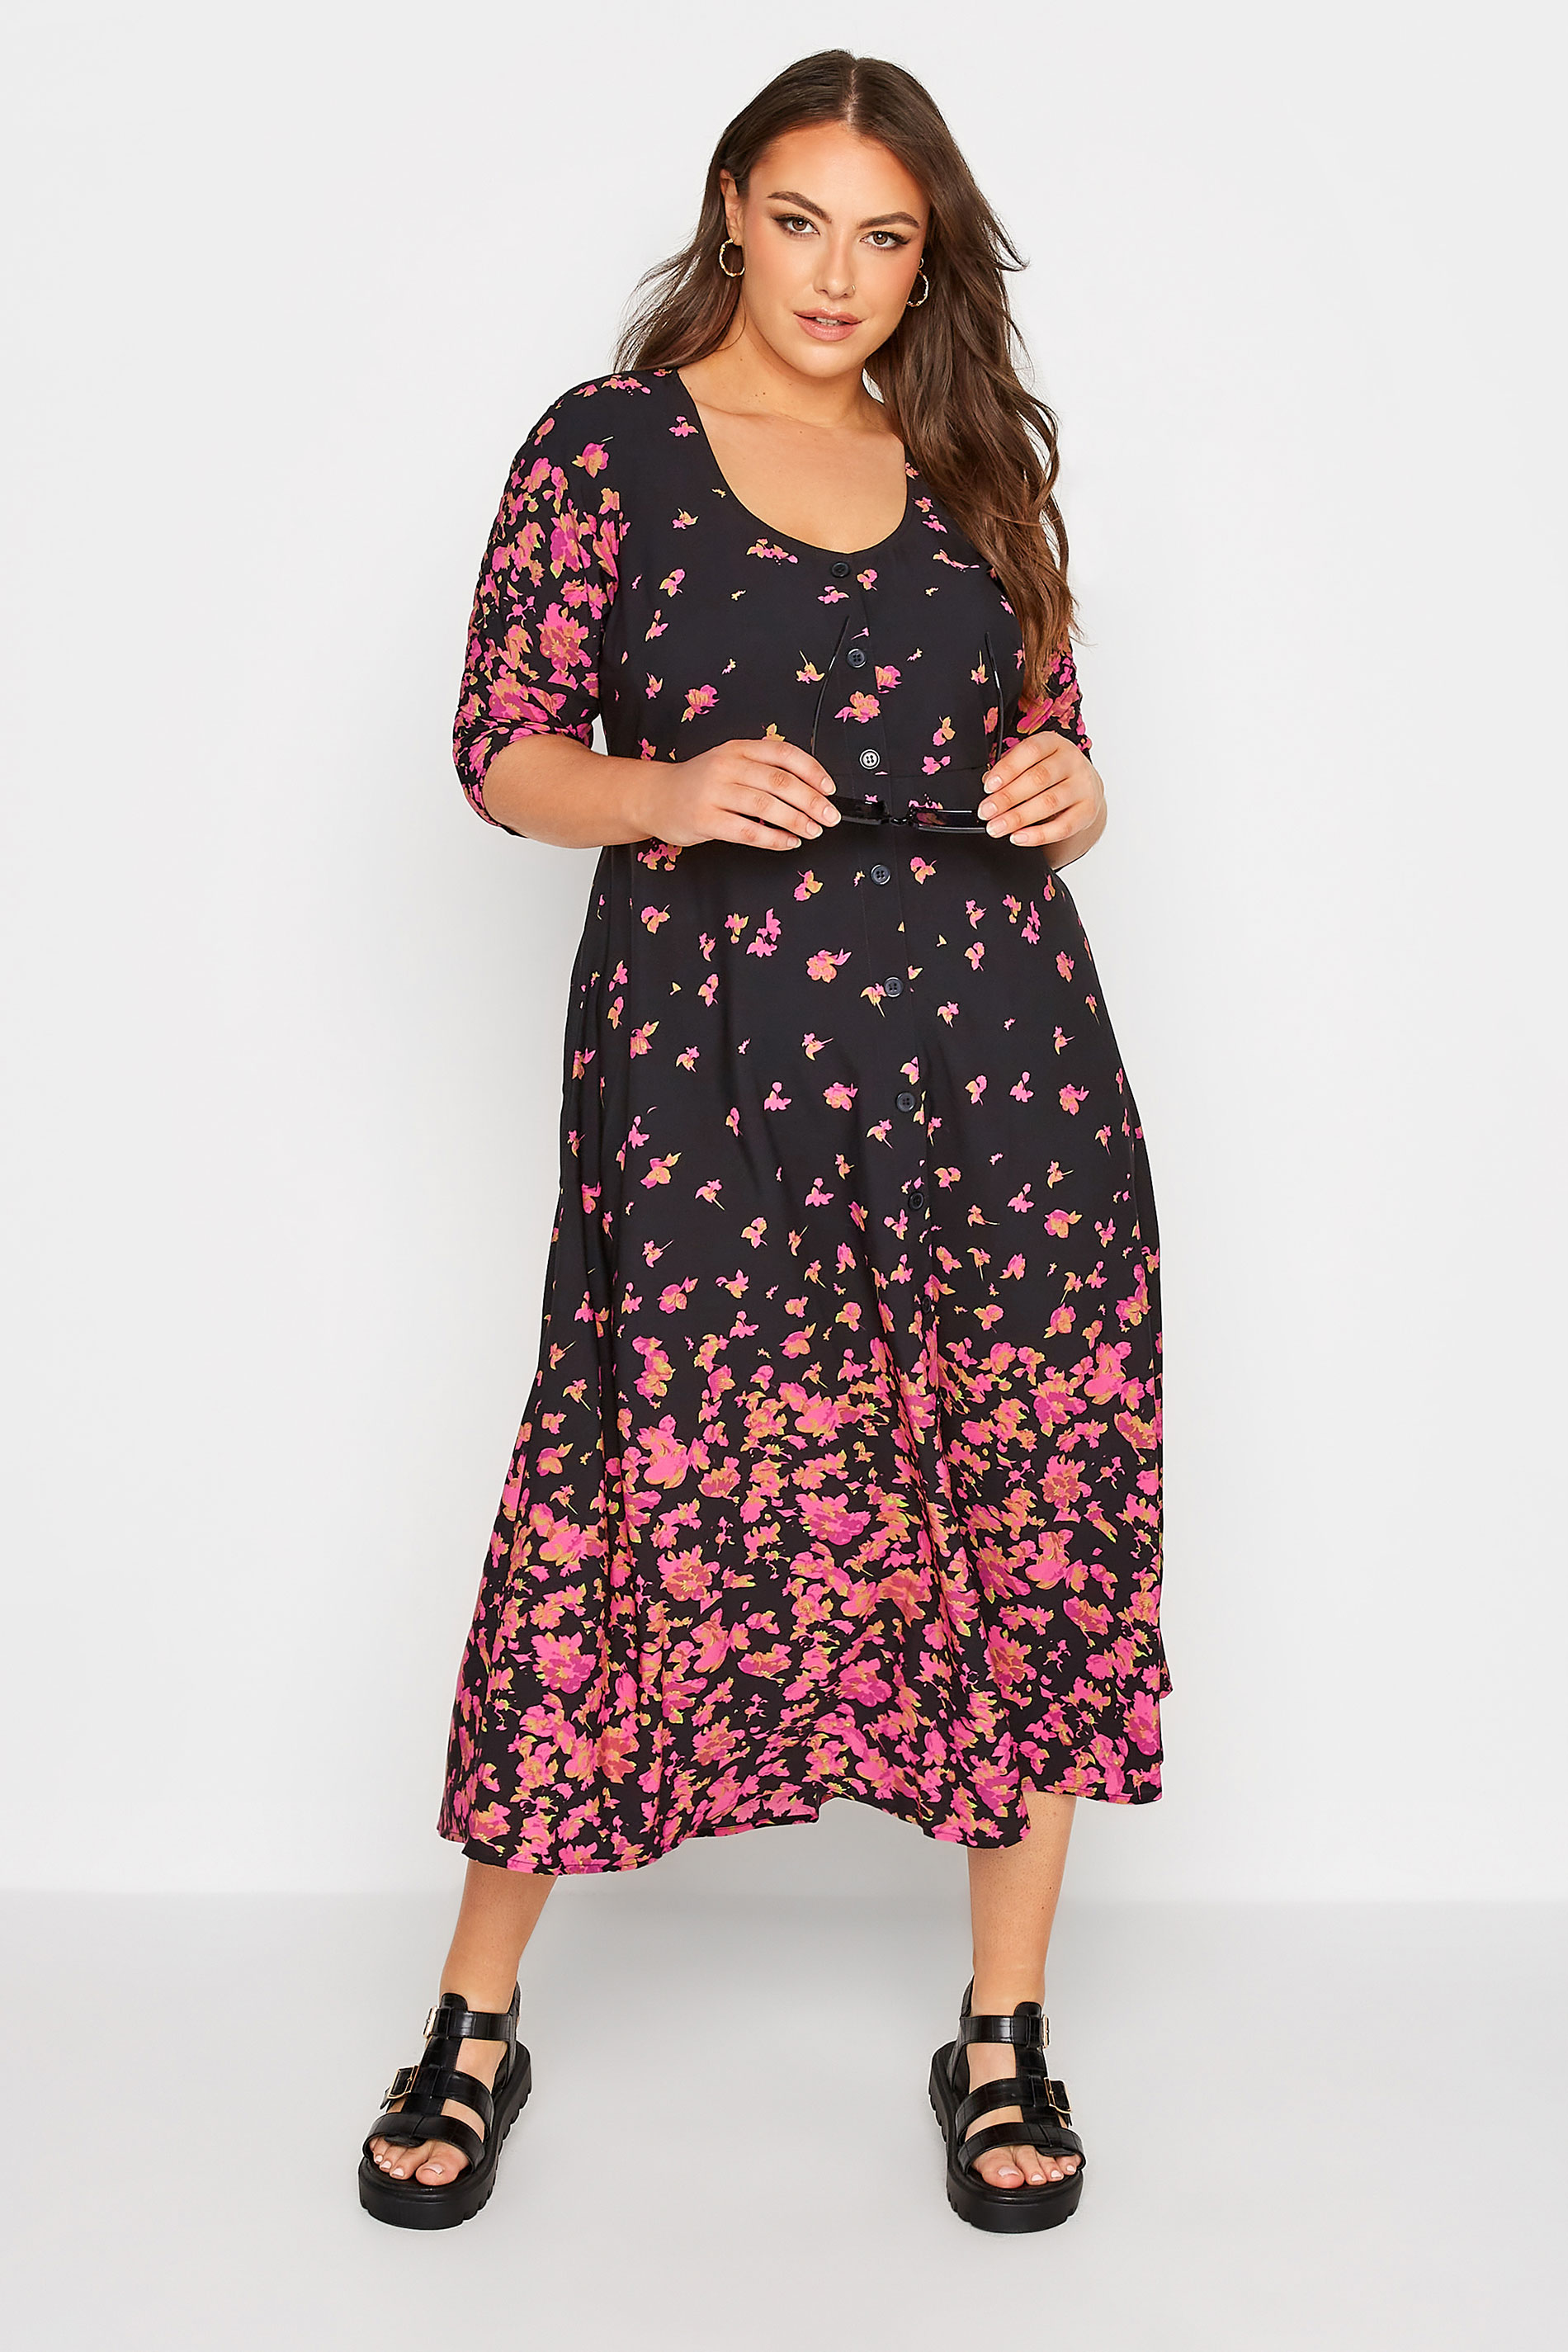 Robes Grande Taille Grande taille  Robes Imprimé Floral | LIMITED COLLECTION - Tea Dress Noire Bordures Floral Rose - IB74207